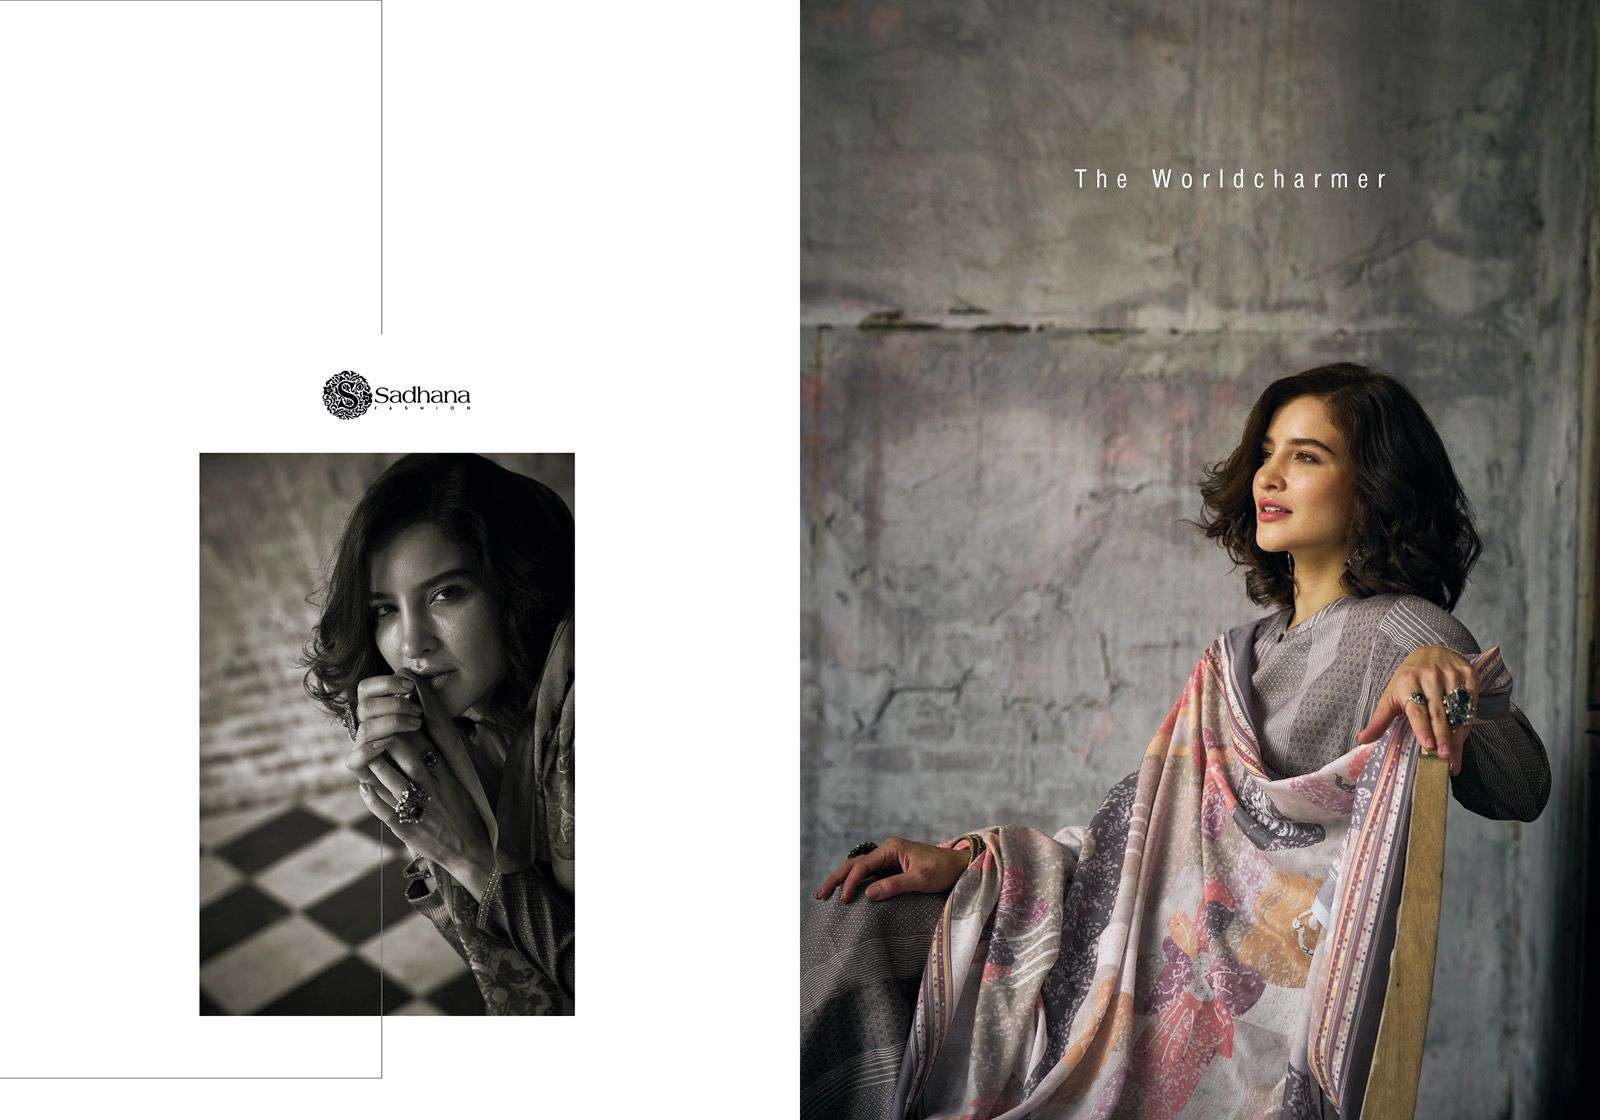 sadhana fashion sufiyana 2176-2185 series trendy designer top bottom with dupatta new catalogue surat 